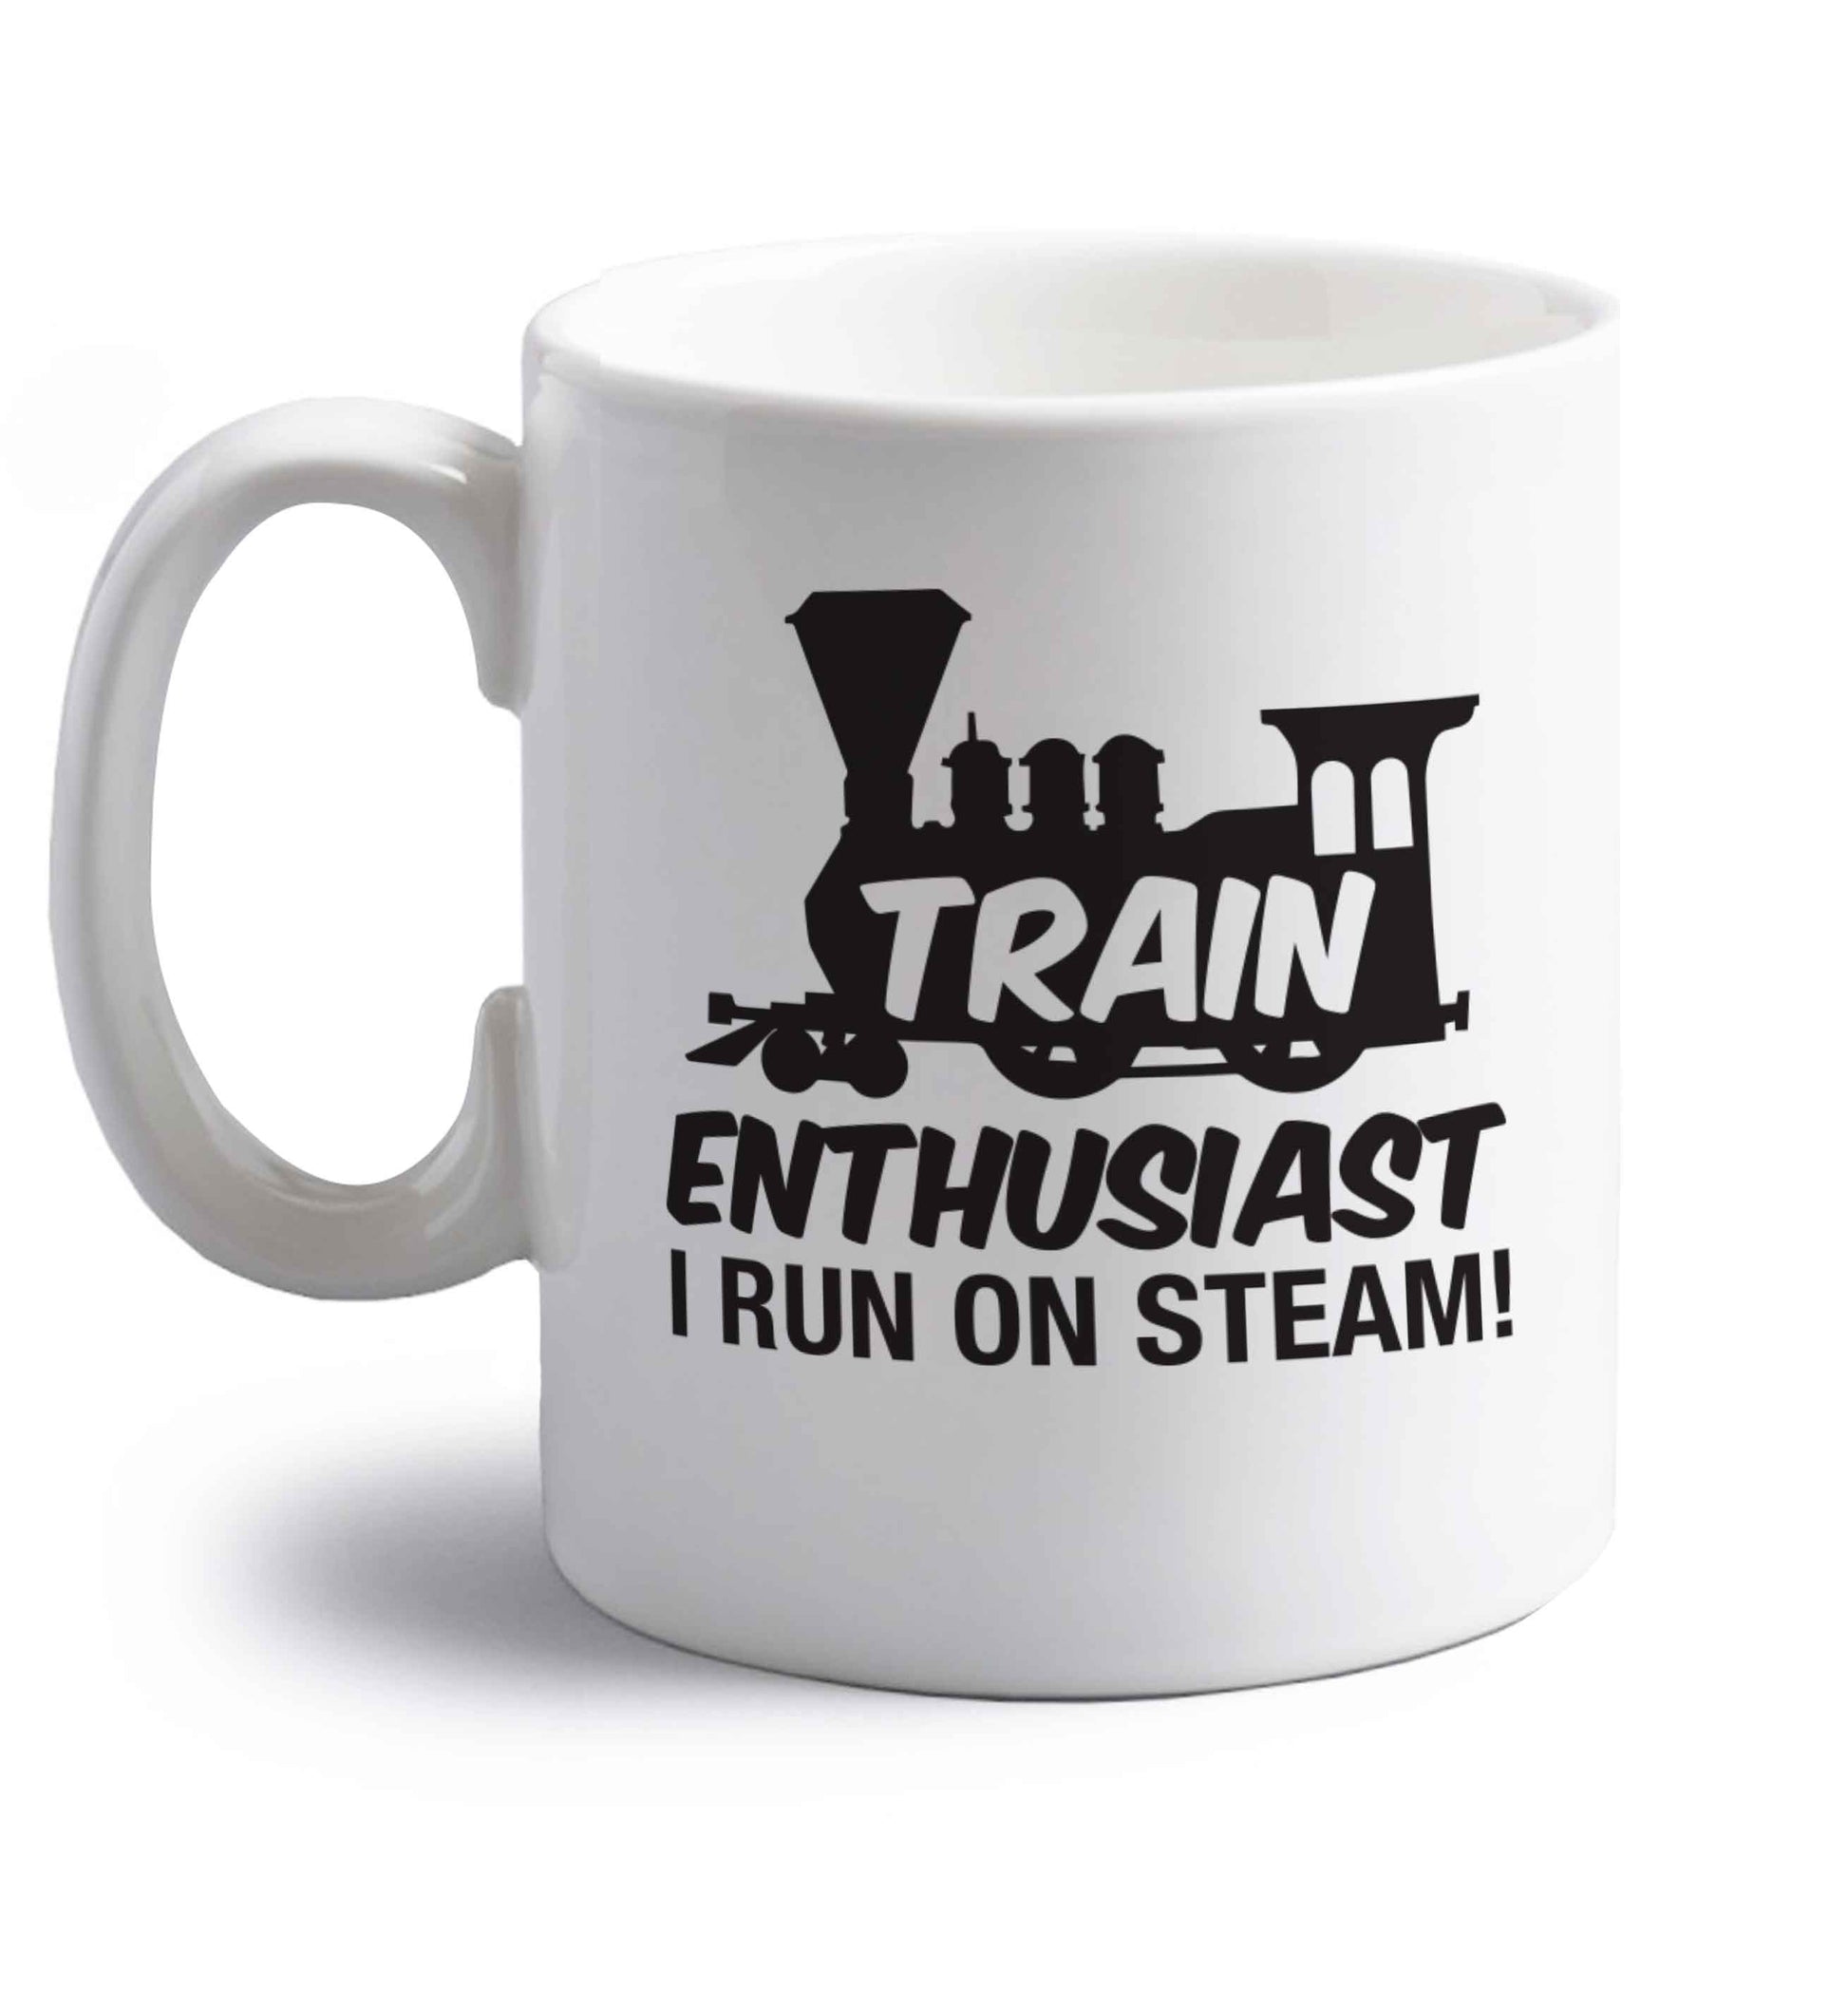 Train enthusiast I run on steam right handed white ceramic mug 